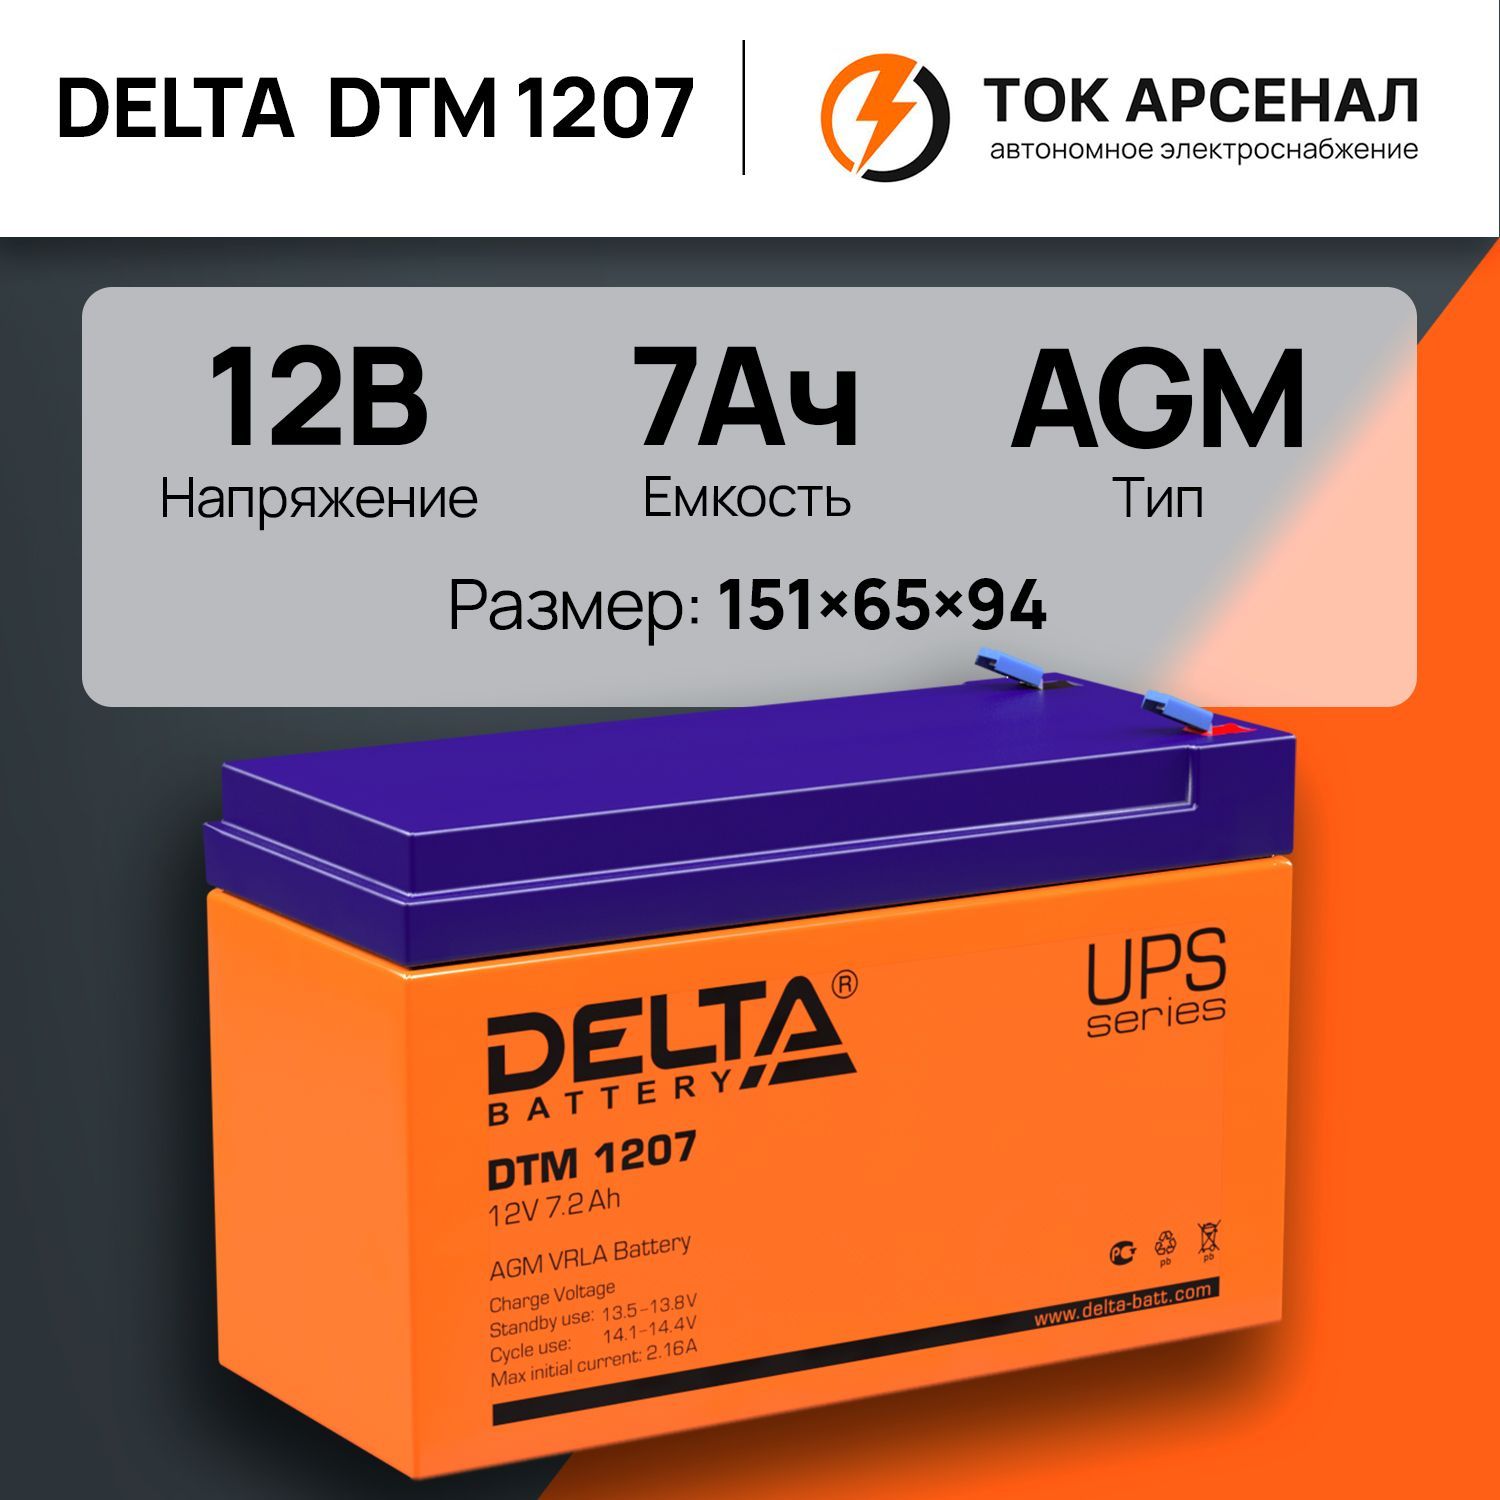 Dtm 1207 12v. Delta DTM 1209. Батарея Delta DTM 1207. Аккумуляторная батарея для ИБП Delta DTM 1207. Батарея для ИБП Delta DTM 1207 12в 7.2Ач.